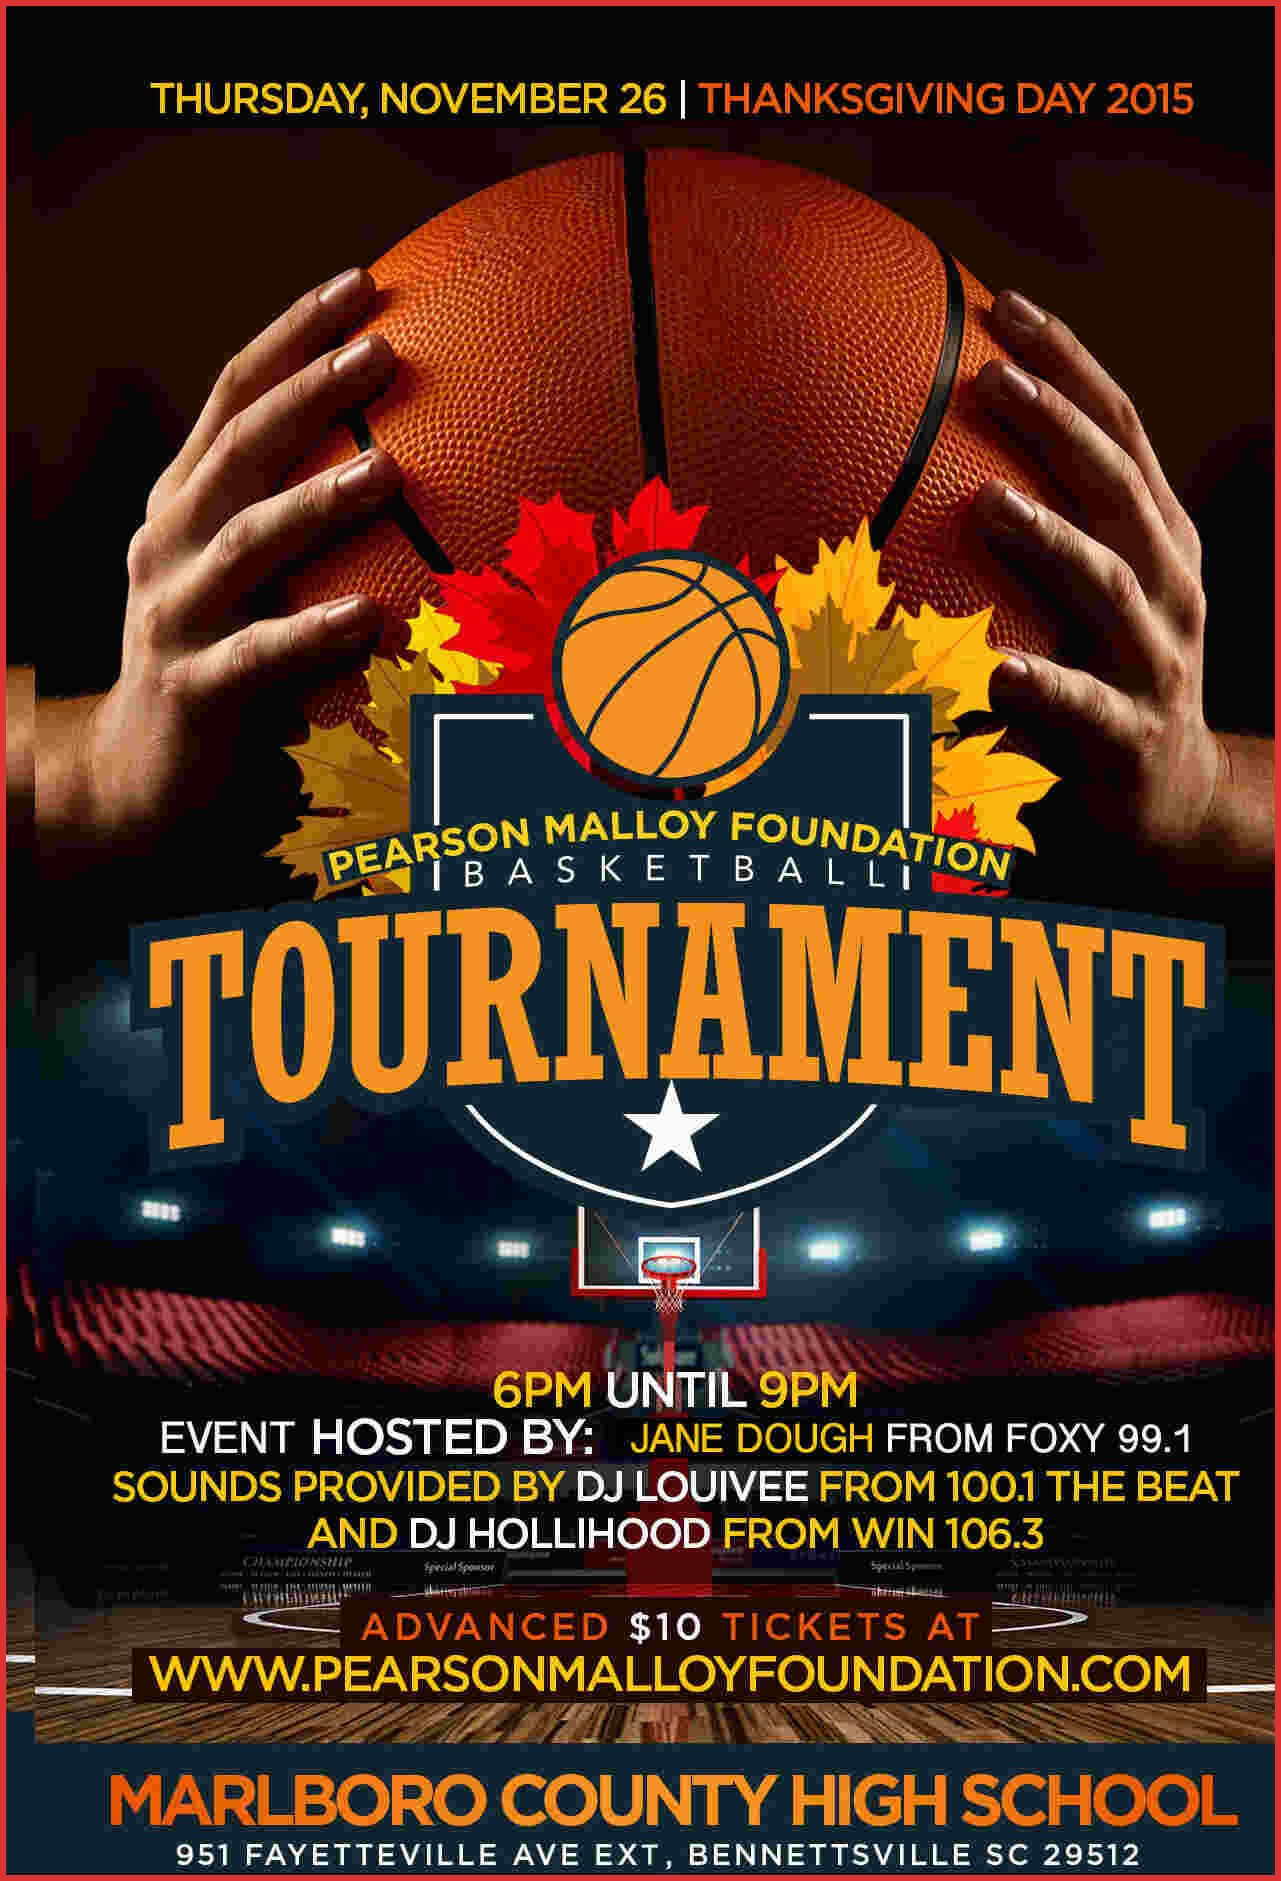 003 Template Ideas On Basketball Tournament Flyer Best Of With Basketball Tournament Flyer Template